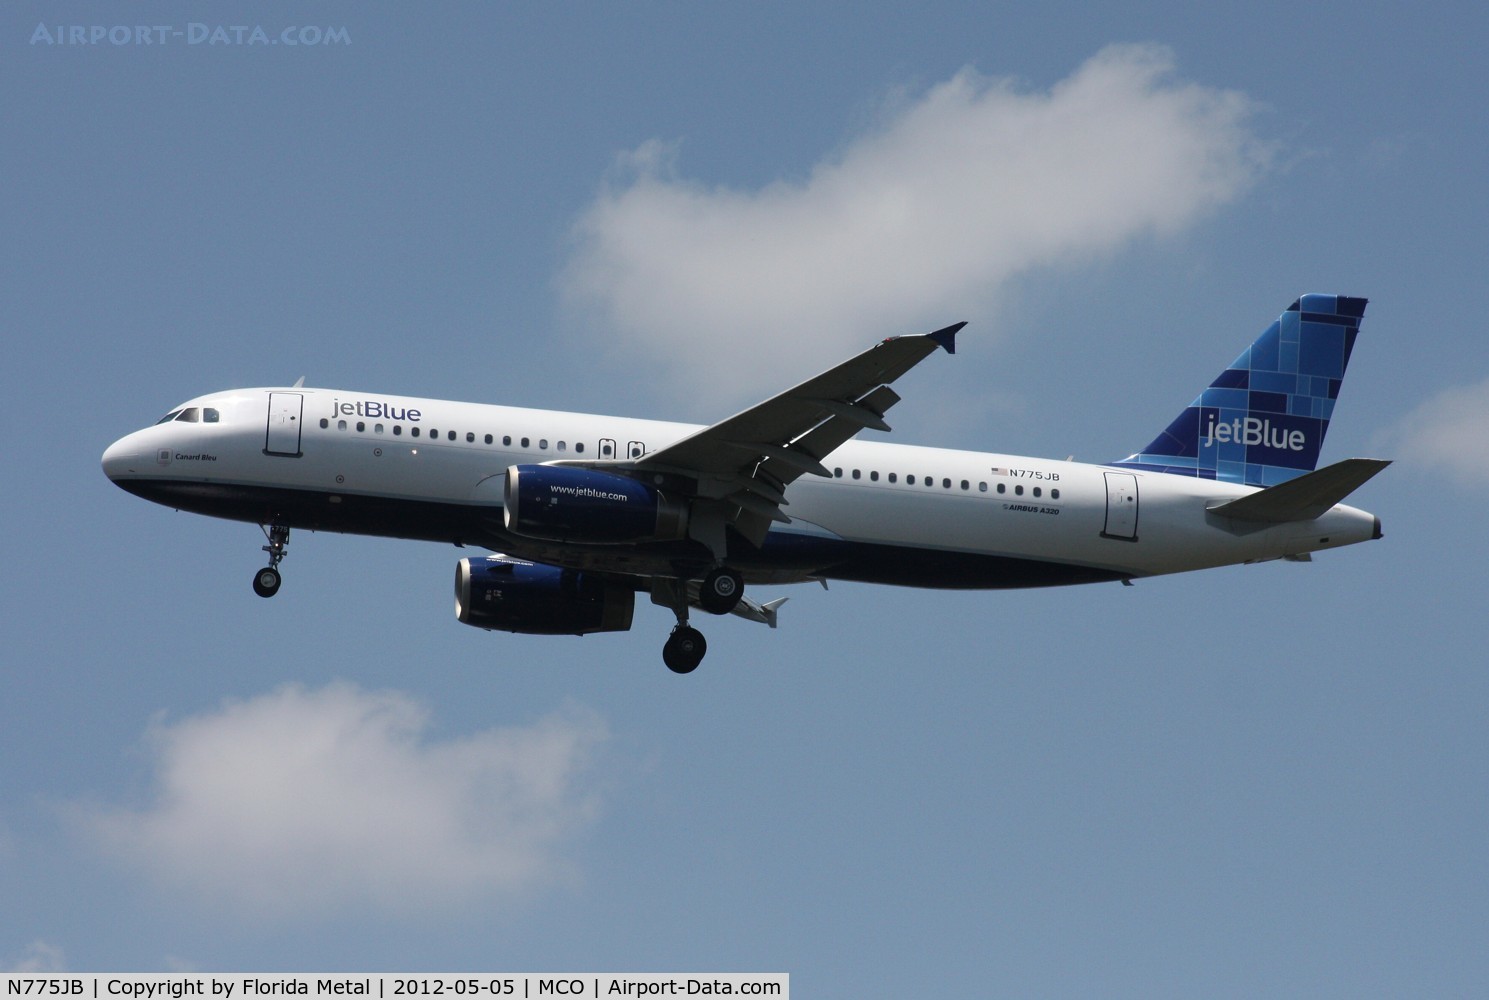 N775JB, 2009 Airbus A320-232 C/N 3800, Jet Blue A320